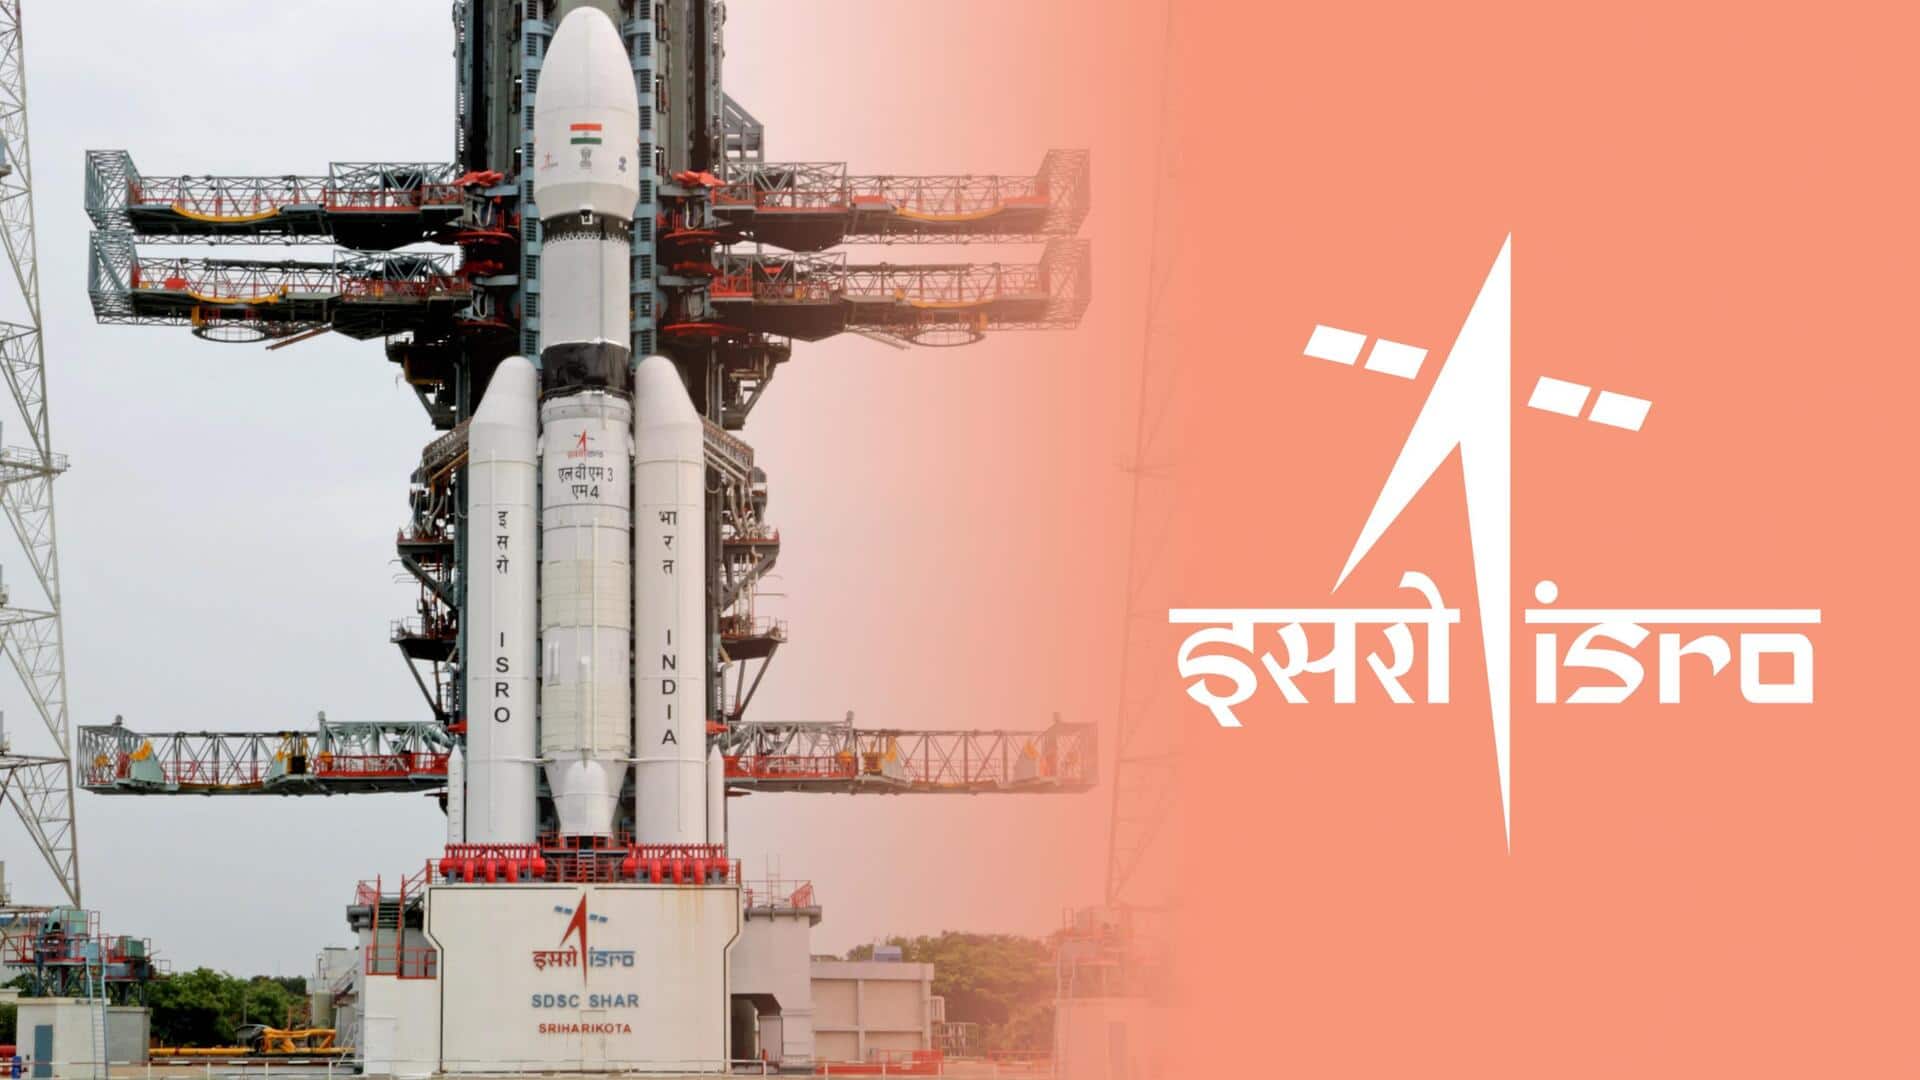 Why ISRO wants to probe Moon's south pole with Chandrayaan-3